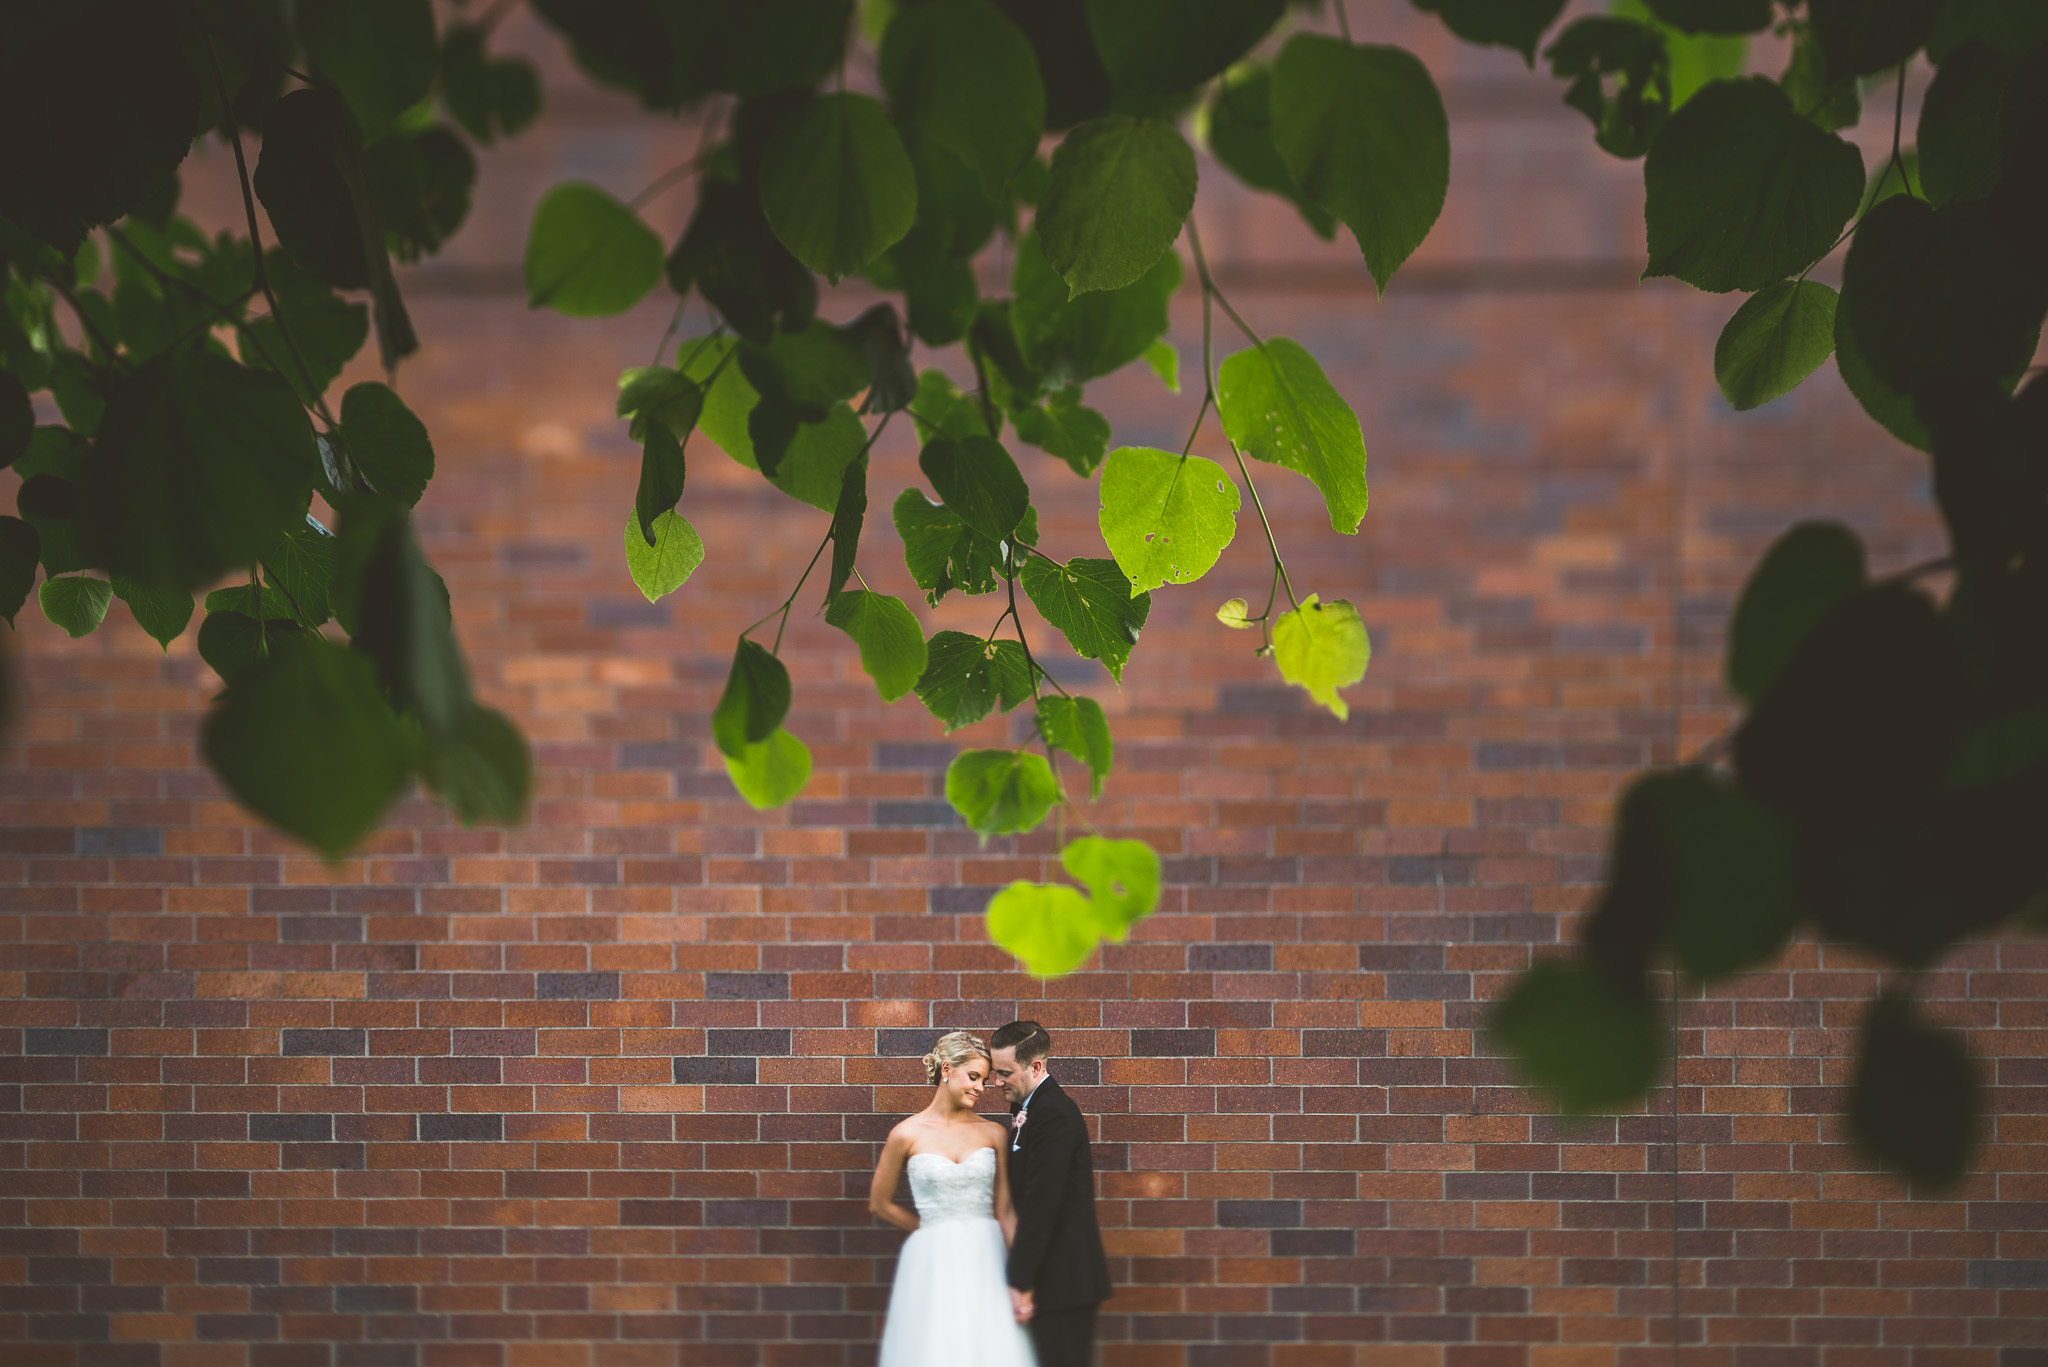 20160528 17 39 44 - Kristina + Dave // Wedding Photographer in Chicago